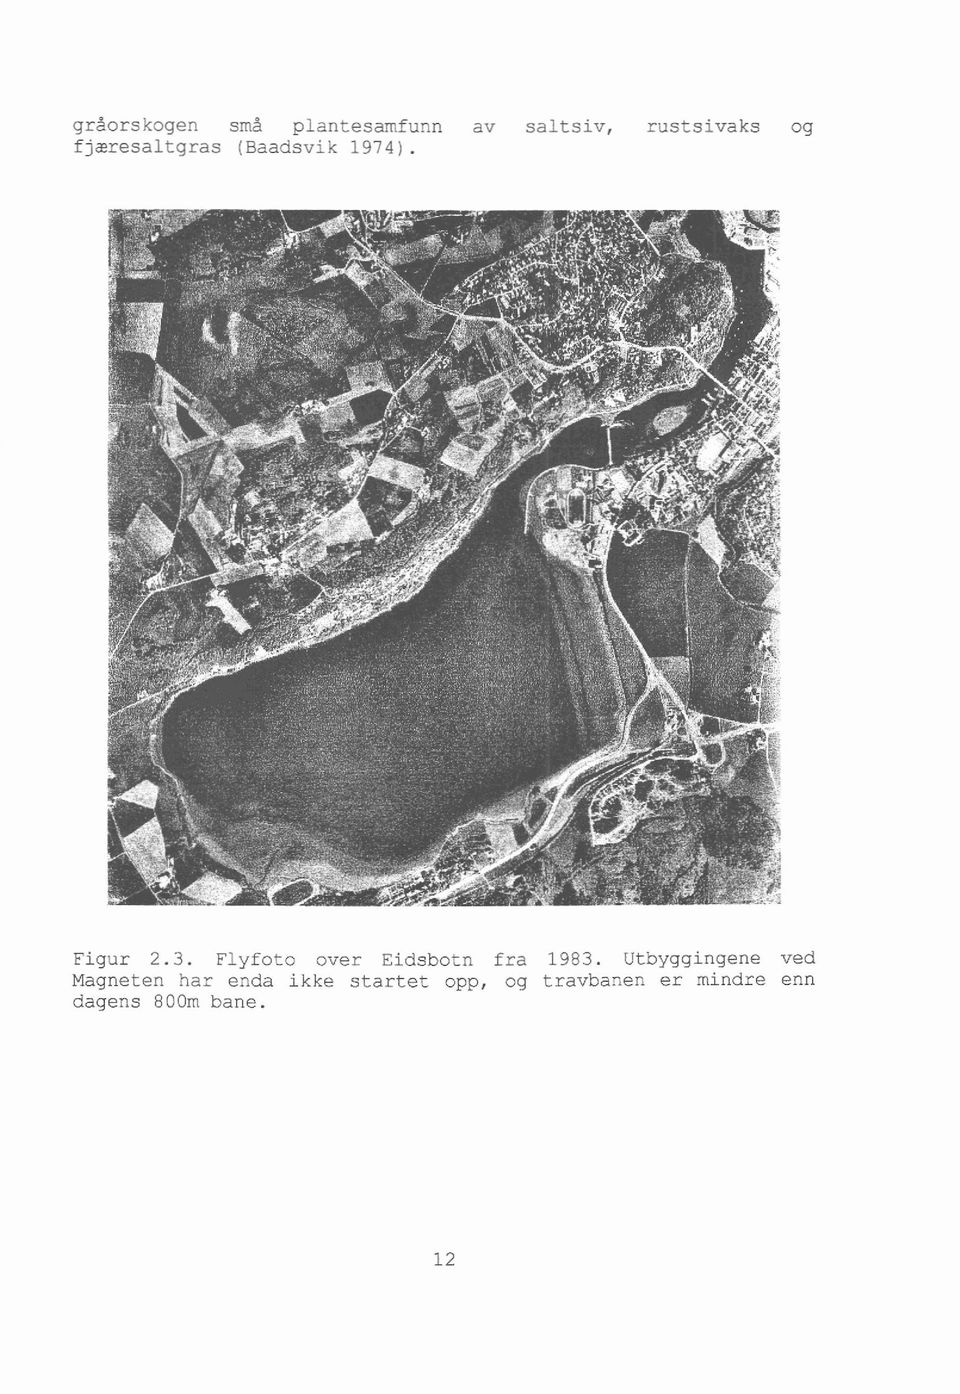 Flyfoto over Eidsbotn fra 1983.